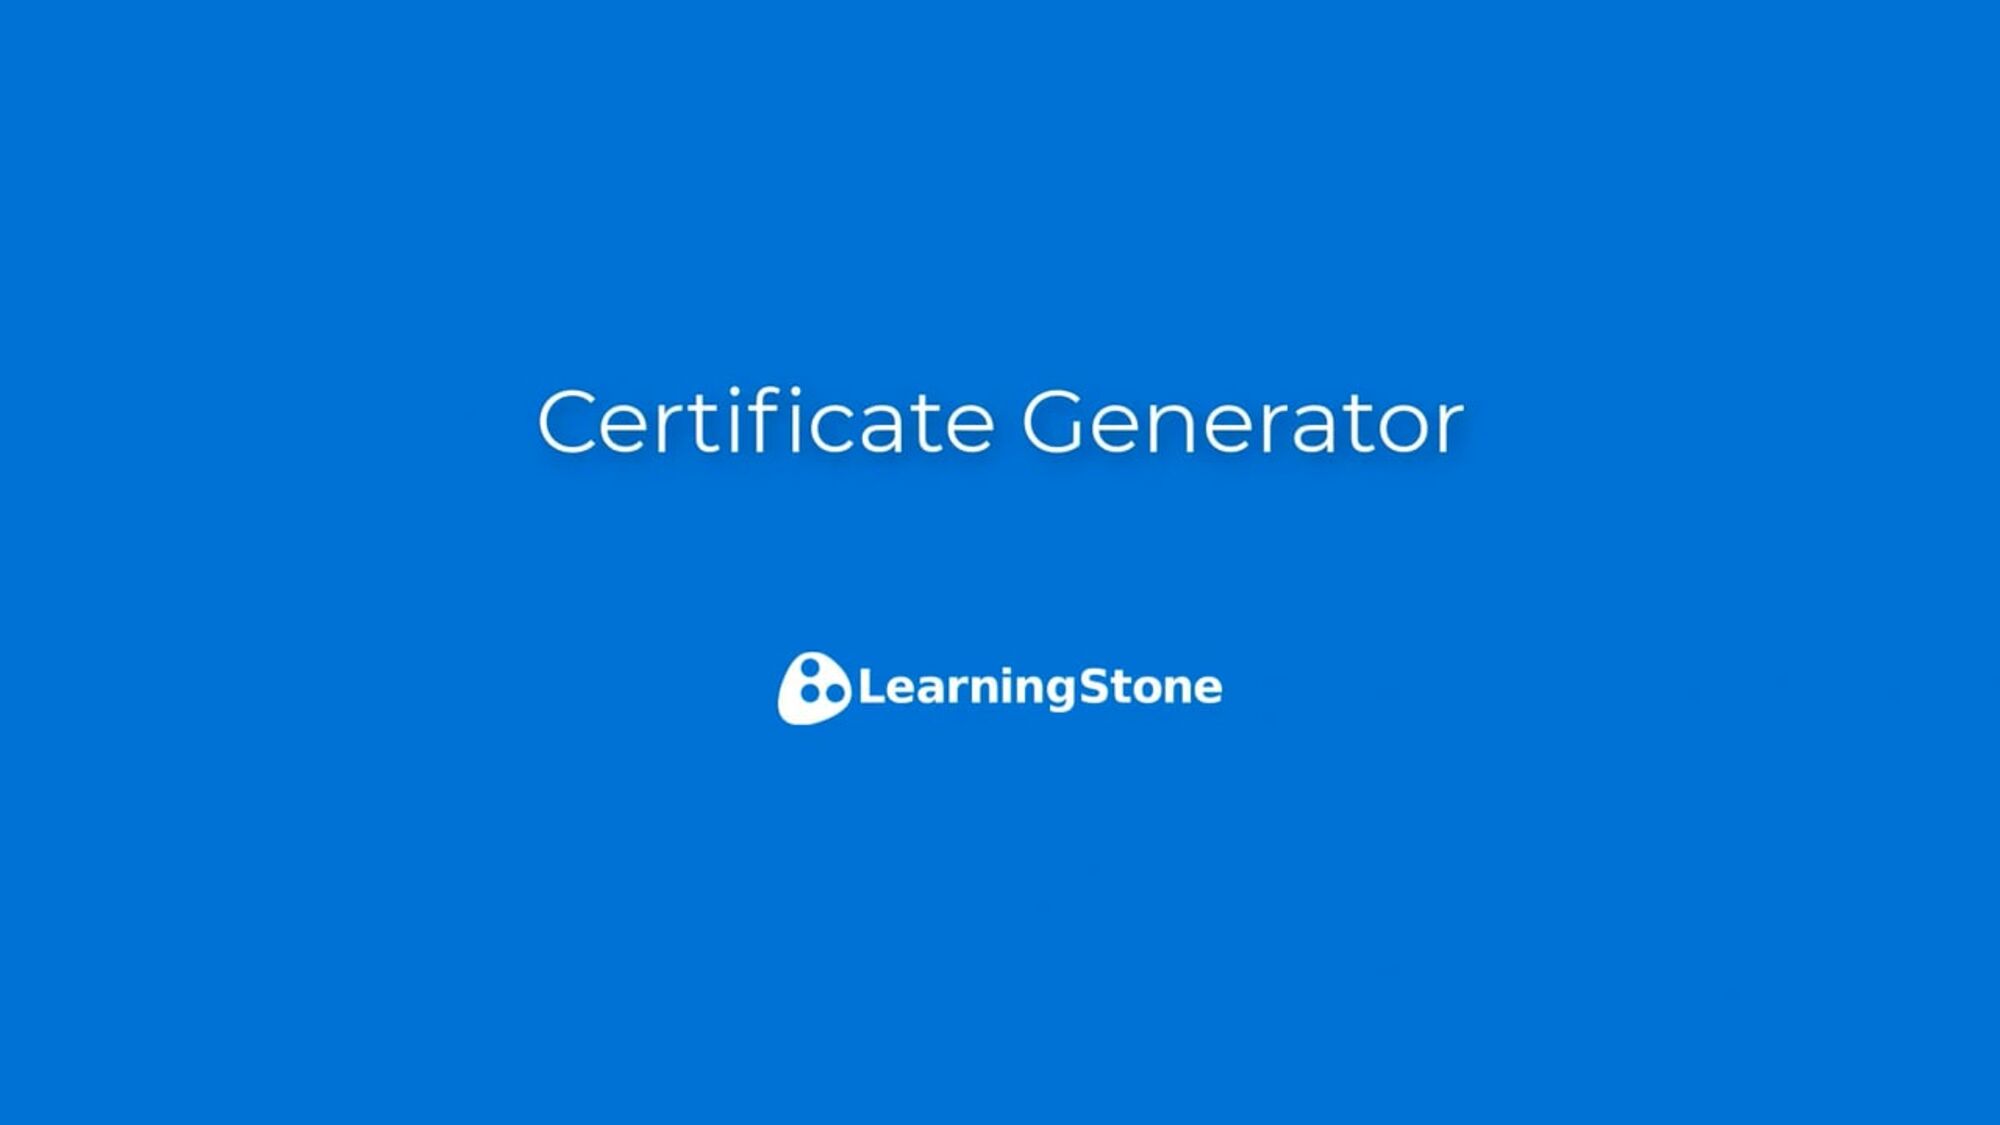 The Certificate Generator